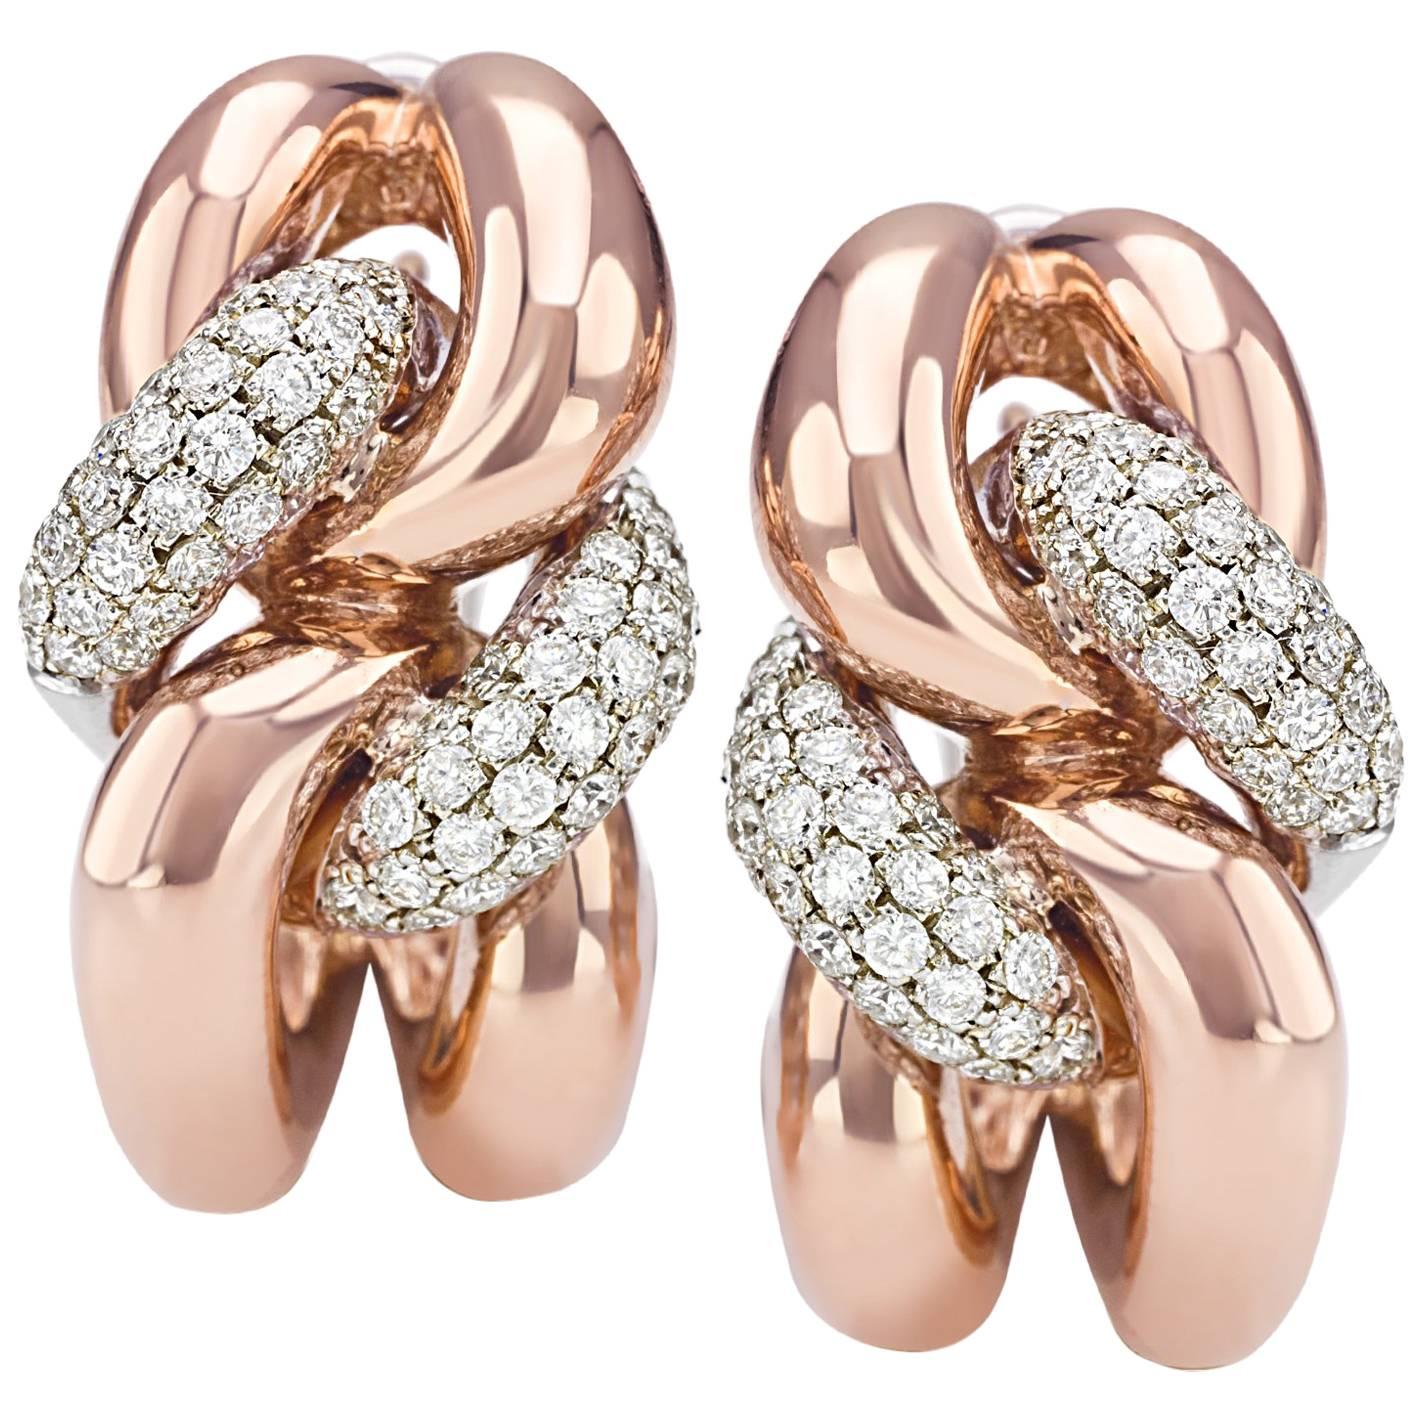 Classic Groumette Earrings 18 Karat Rose Gold and Diamonds